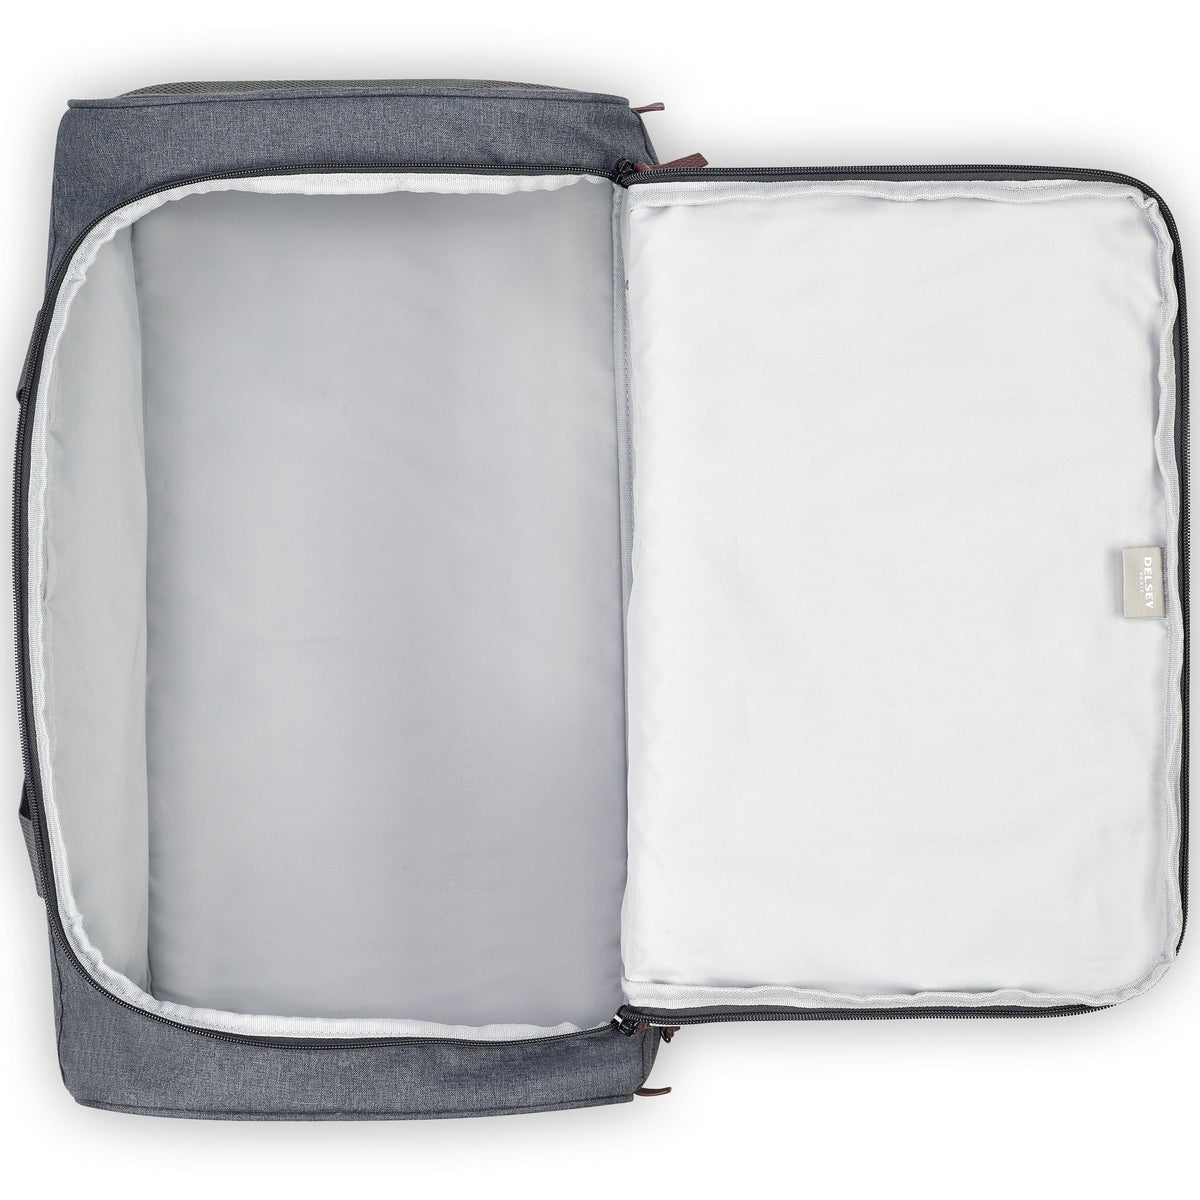 Delsey Maubert 2.0 Carry-On Duffel Bag